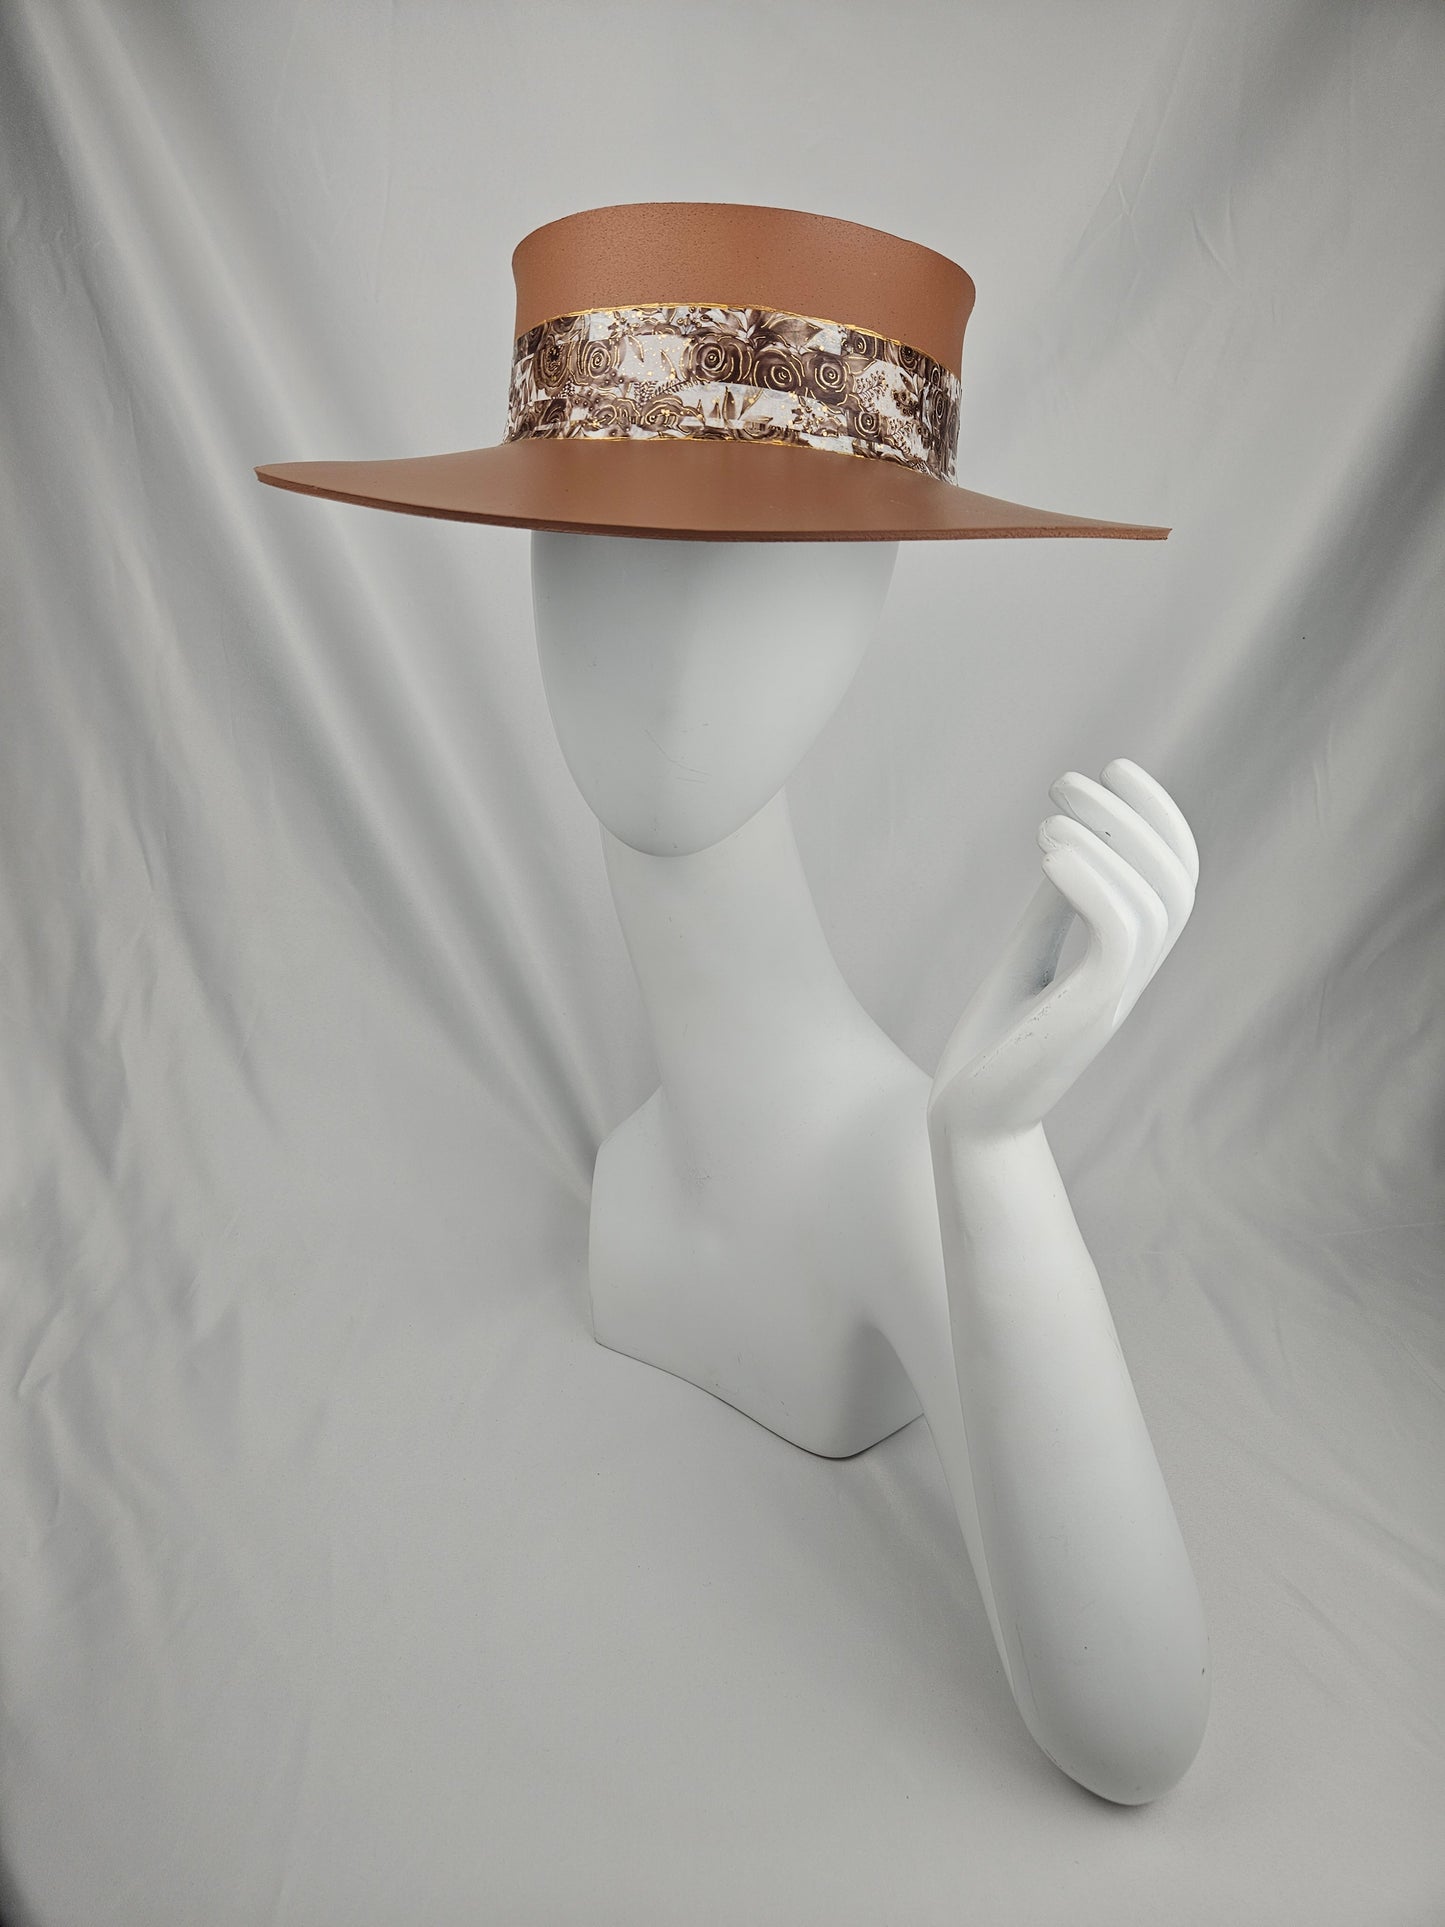 Tall Caramel Brown Audrey Sun Visor Hat with Earthy Brown Floral Band: UV Resistant, Walks, Brunch, Tea, Golf, Wedding, Church, No Headache, Easter, Pool, Beach, Big Brim